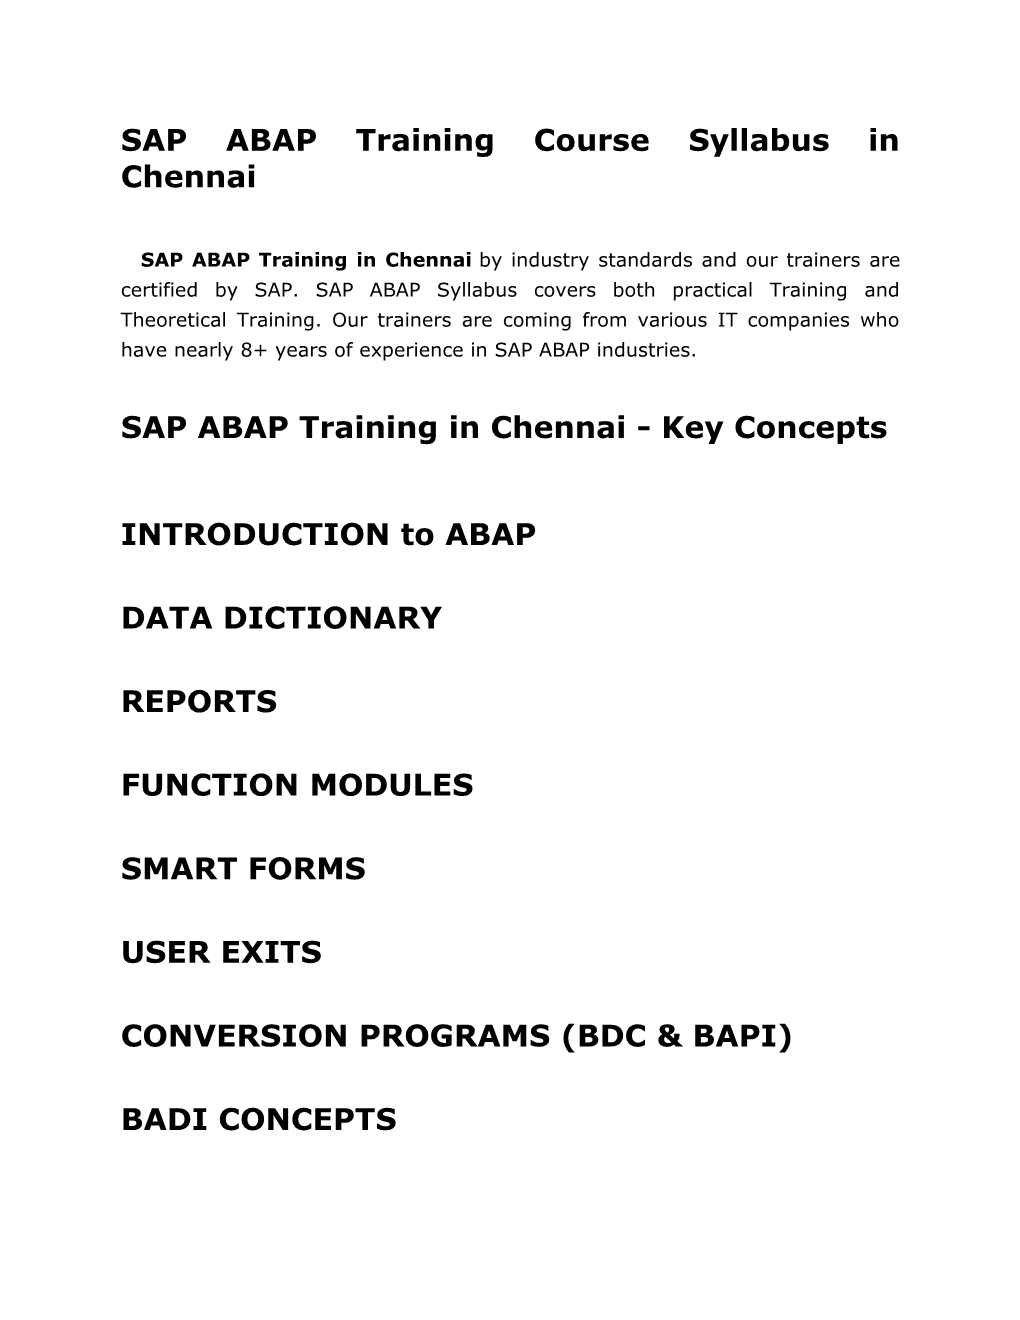 SAP ABAP Training Course Syllabus in Chennai